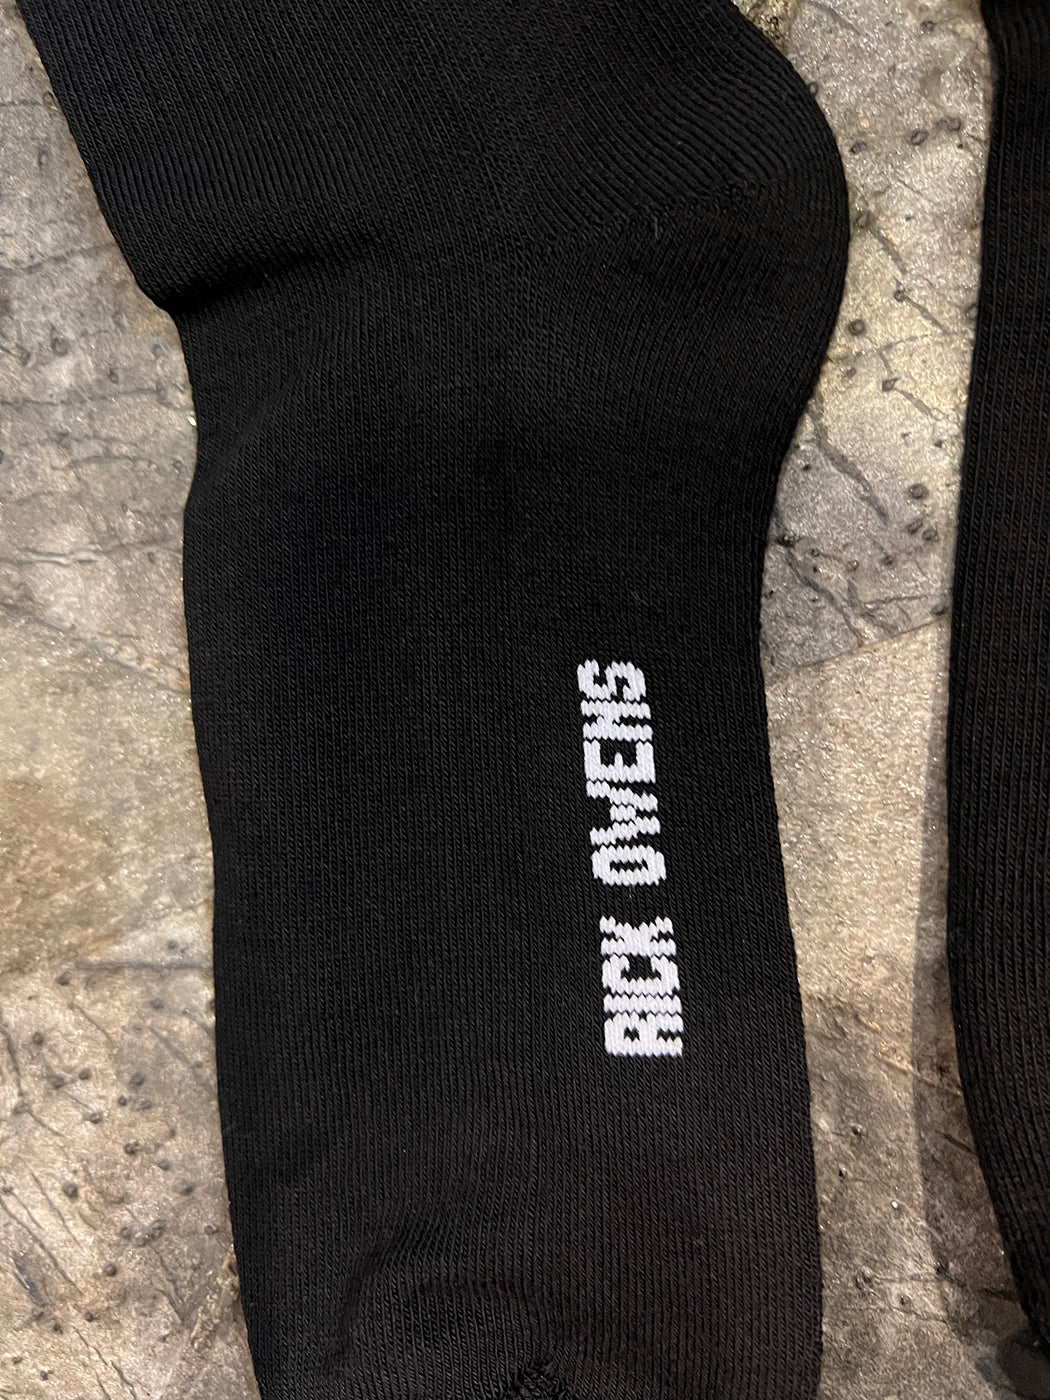 Rick Owens Thigh high socks